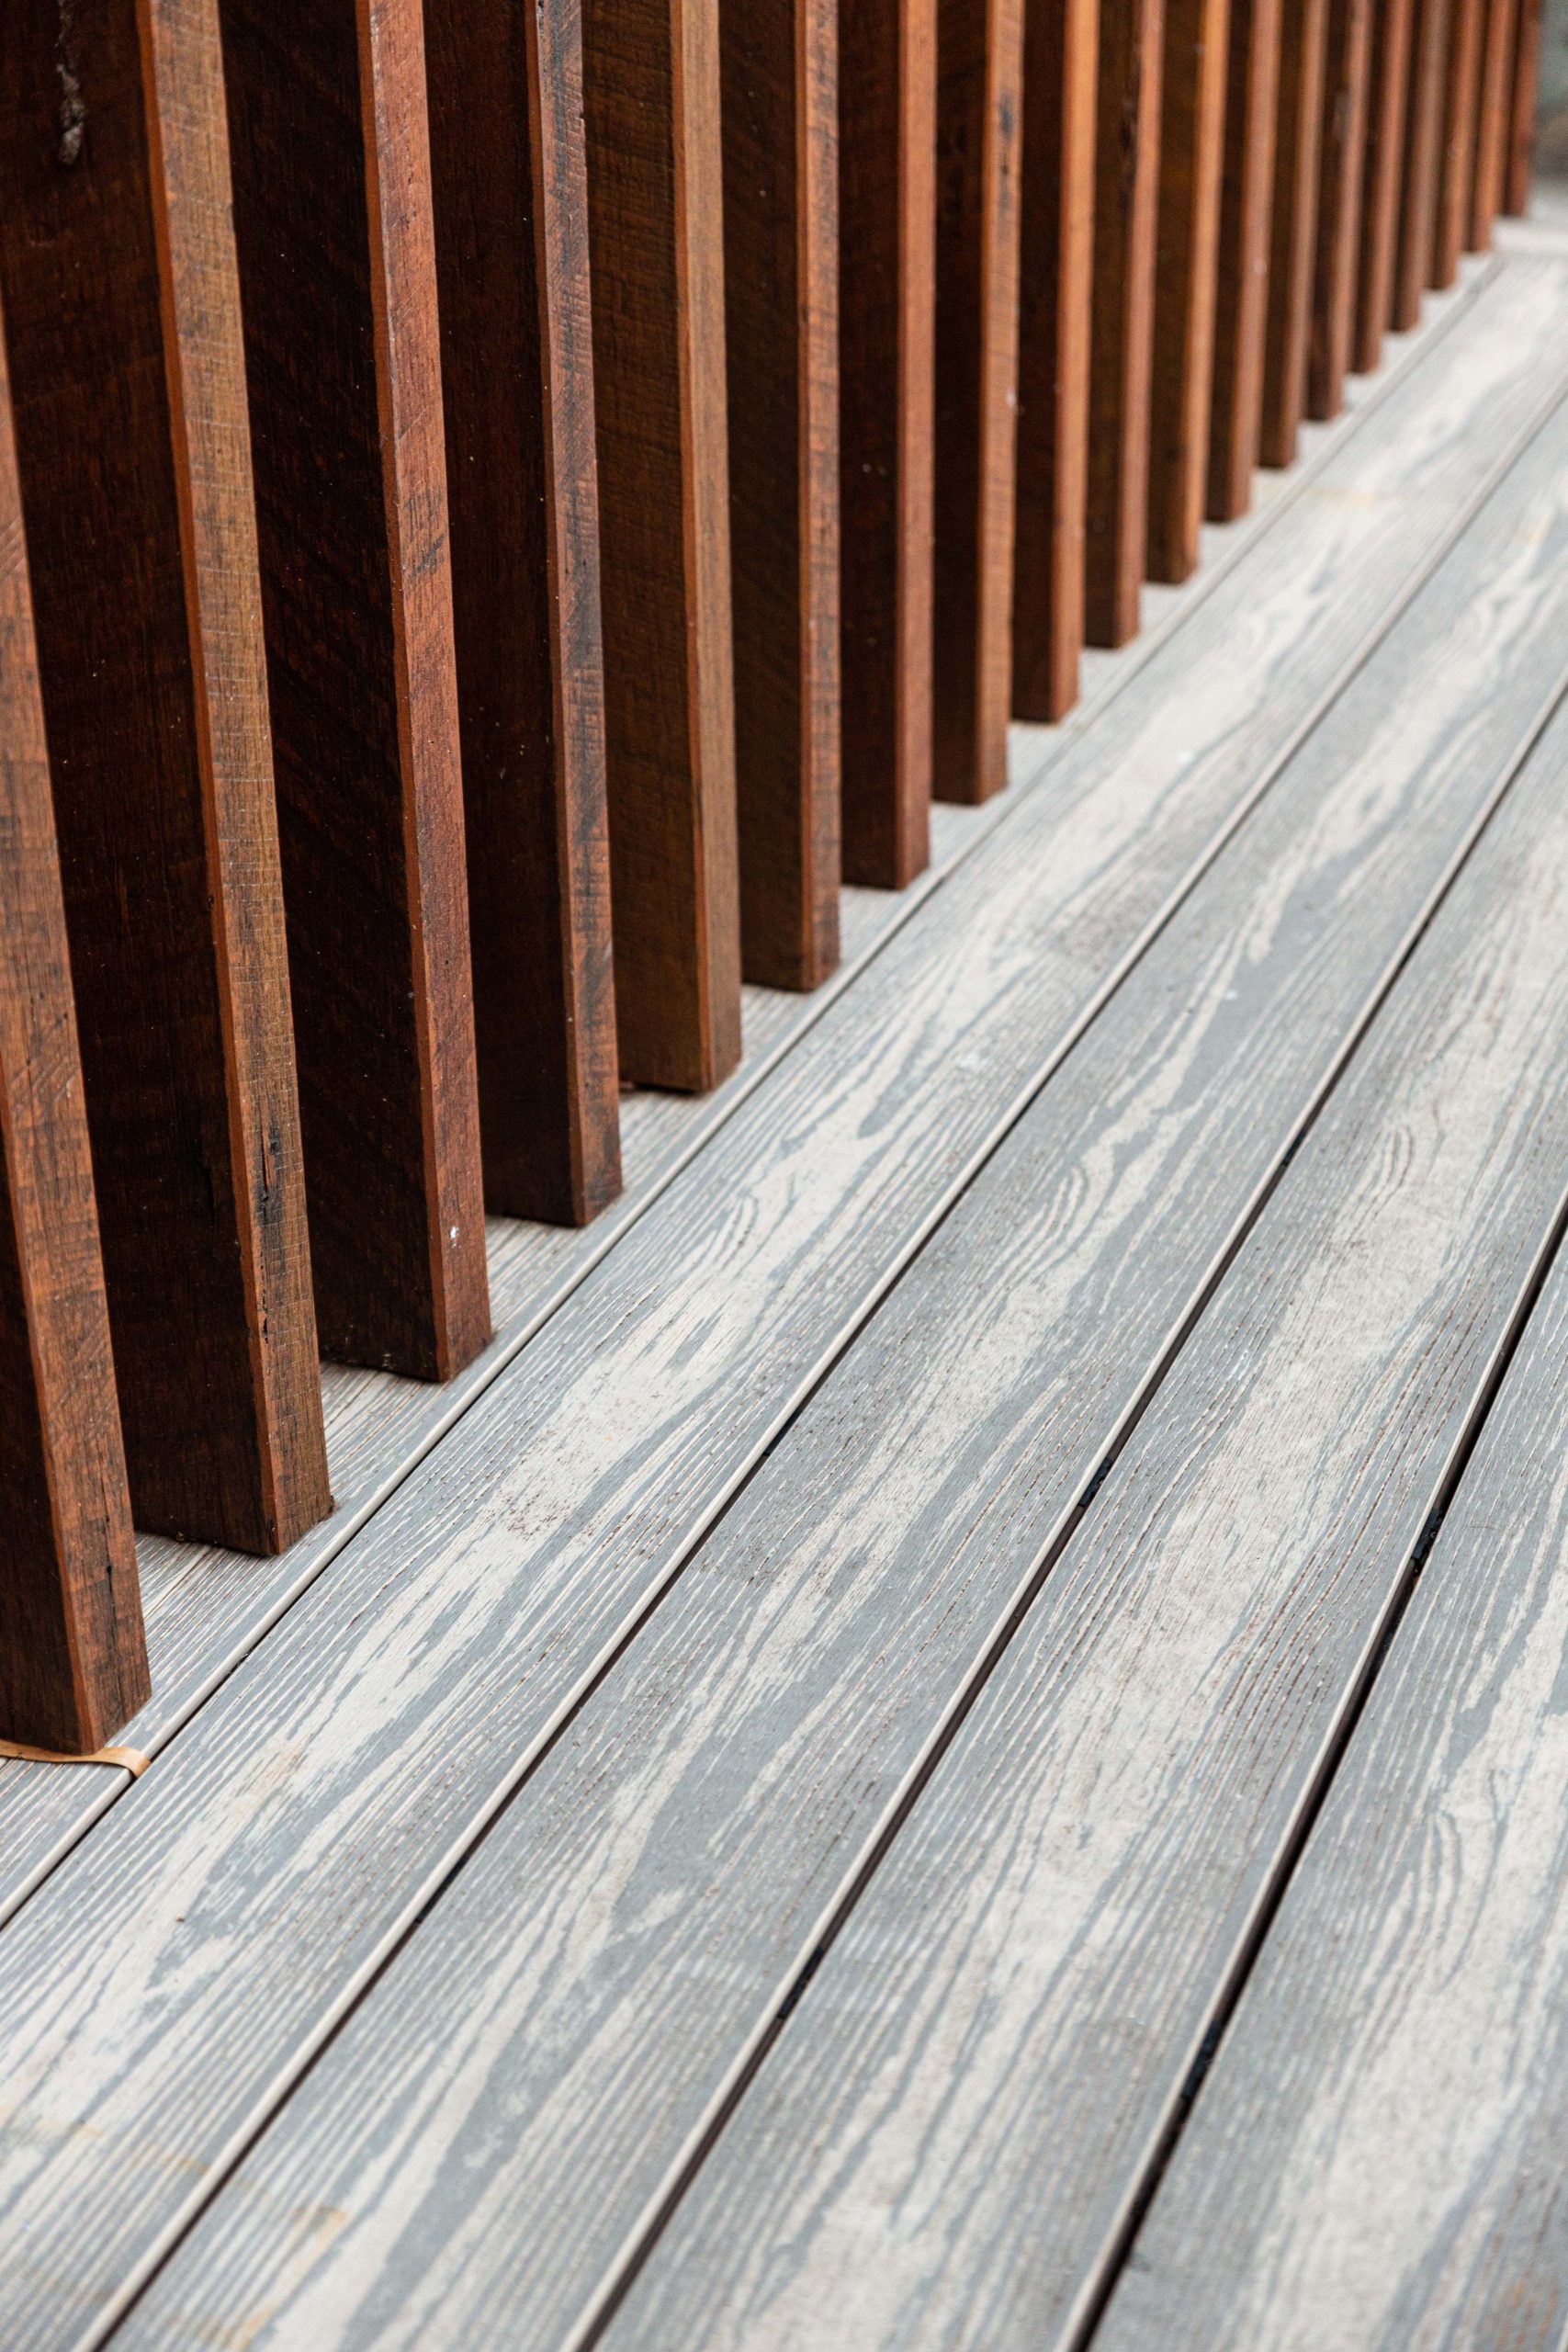 Dark wooden rail posts installed on grey silver composite decking boards